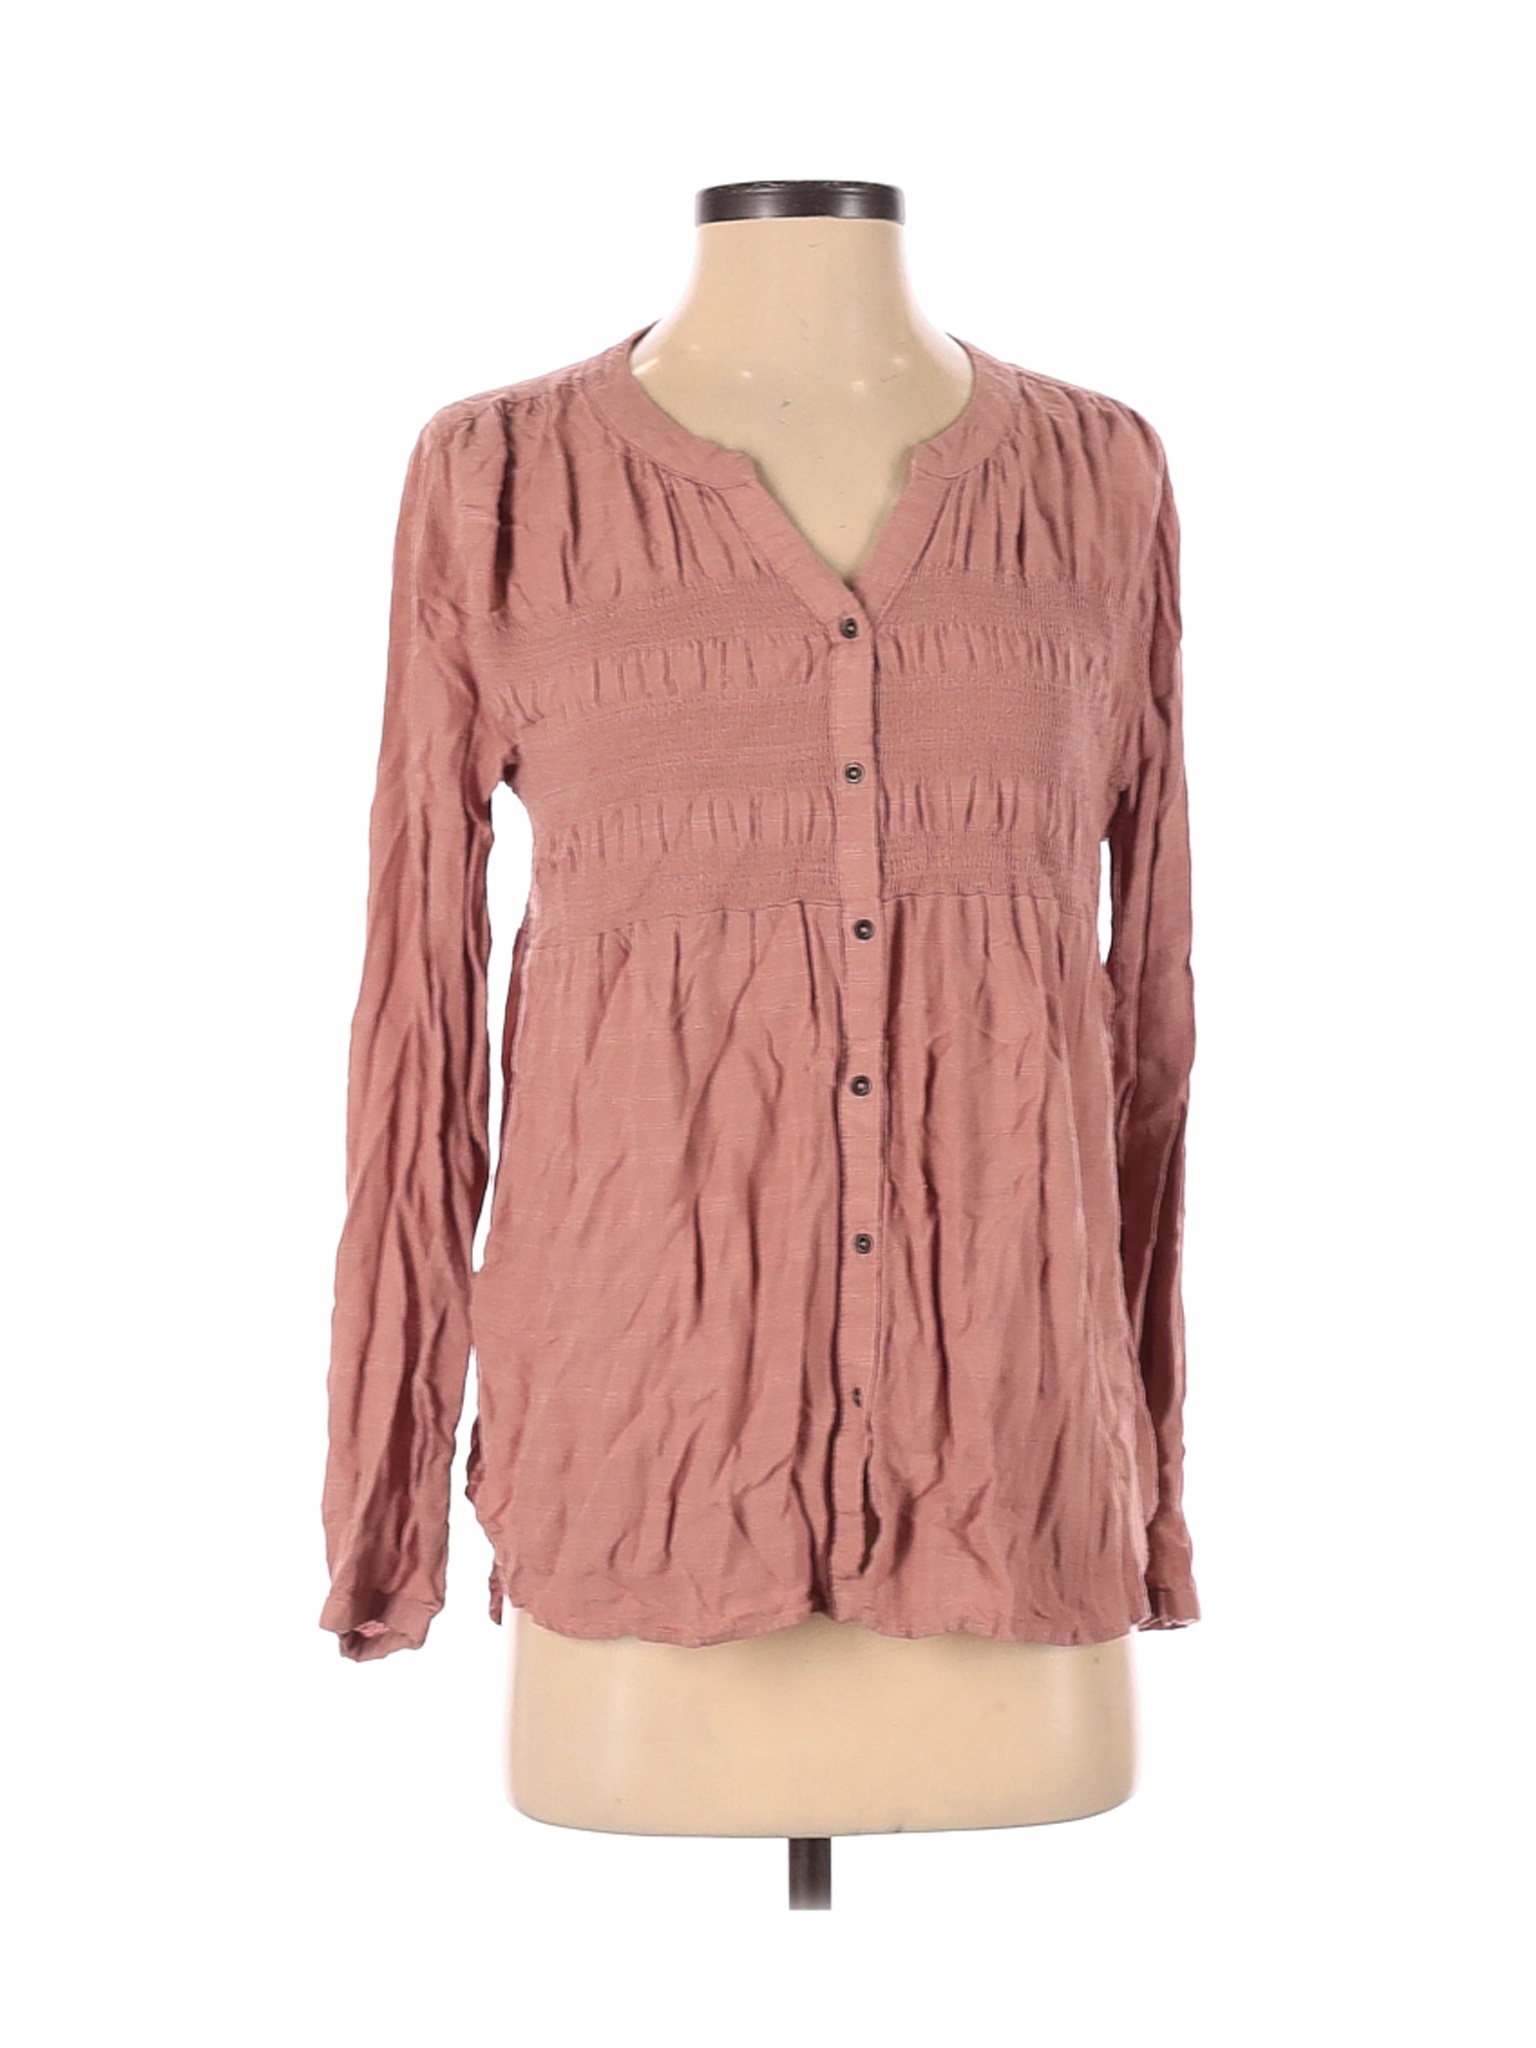 Knox Rose Women Brown Long Sleeve Blouse M | eBay